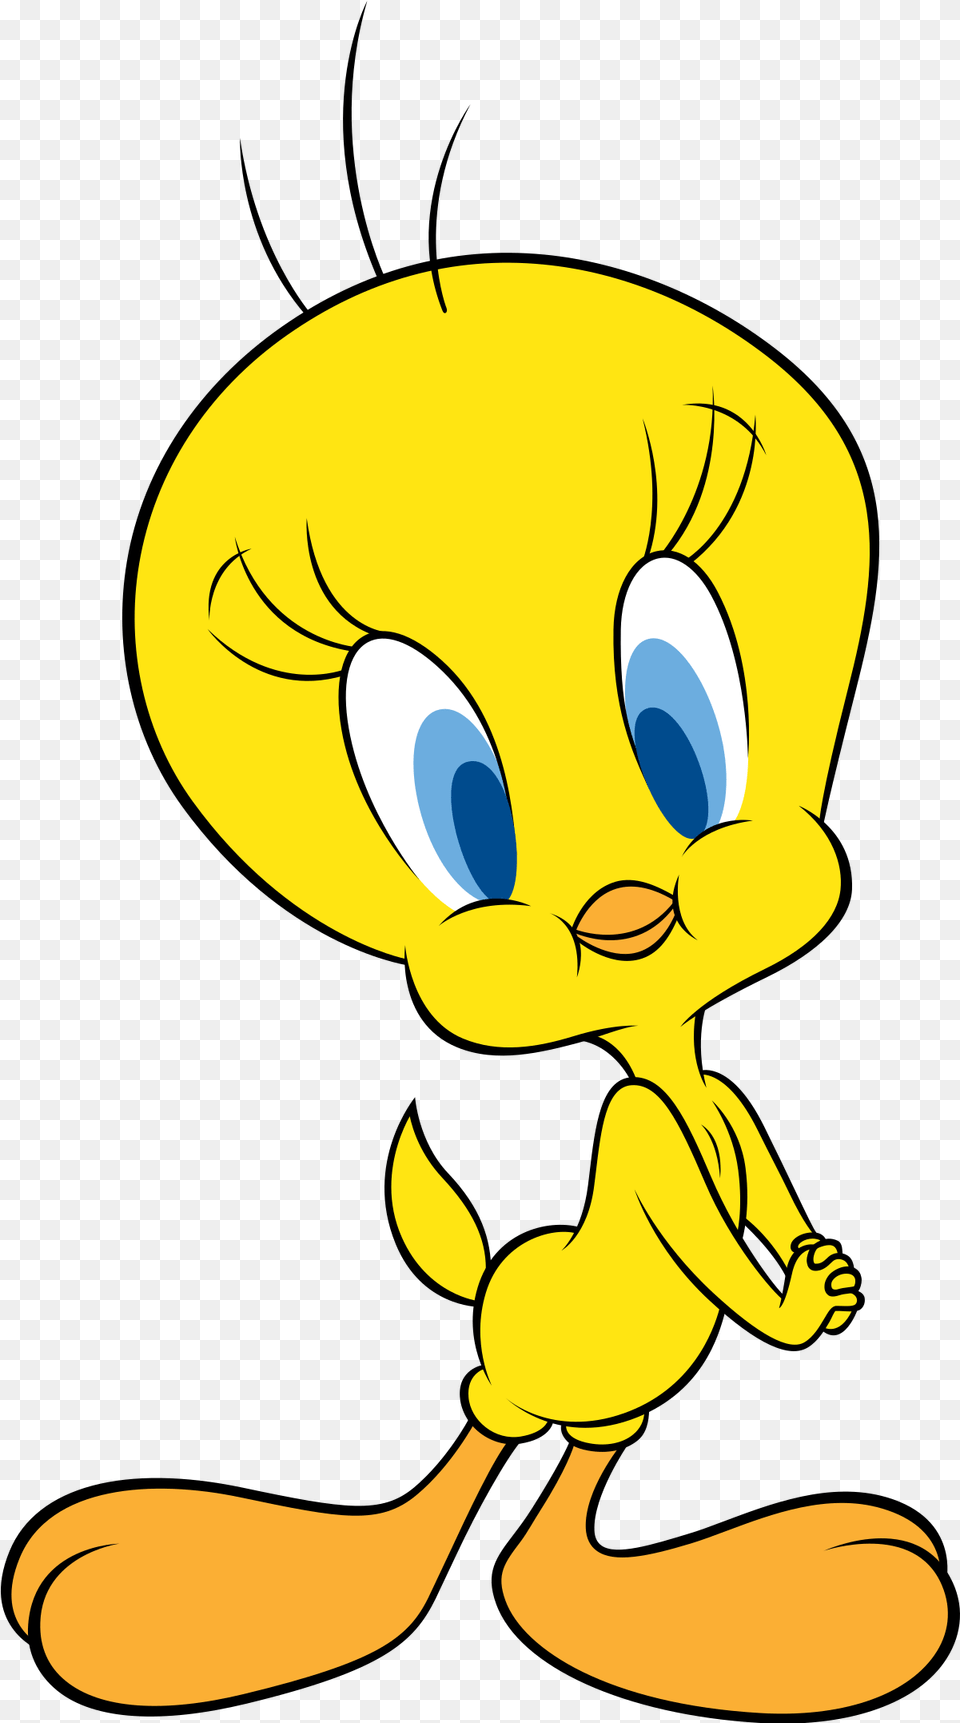 Tweety Wikipedia Looney Tunes Cartoon Characters Png Image